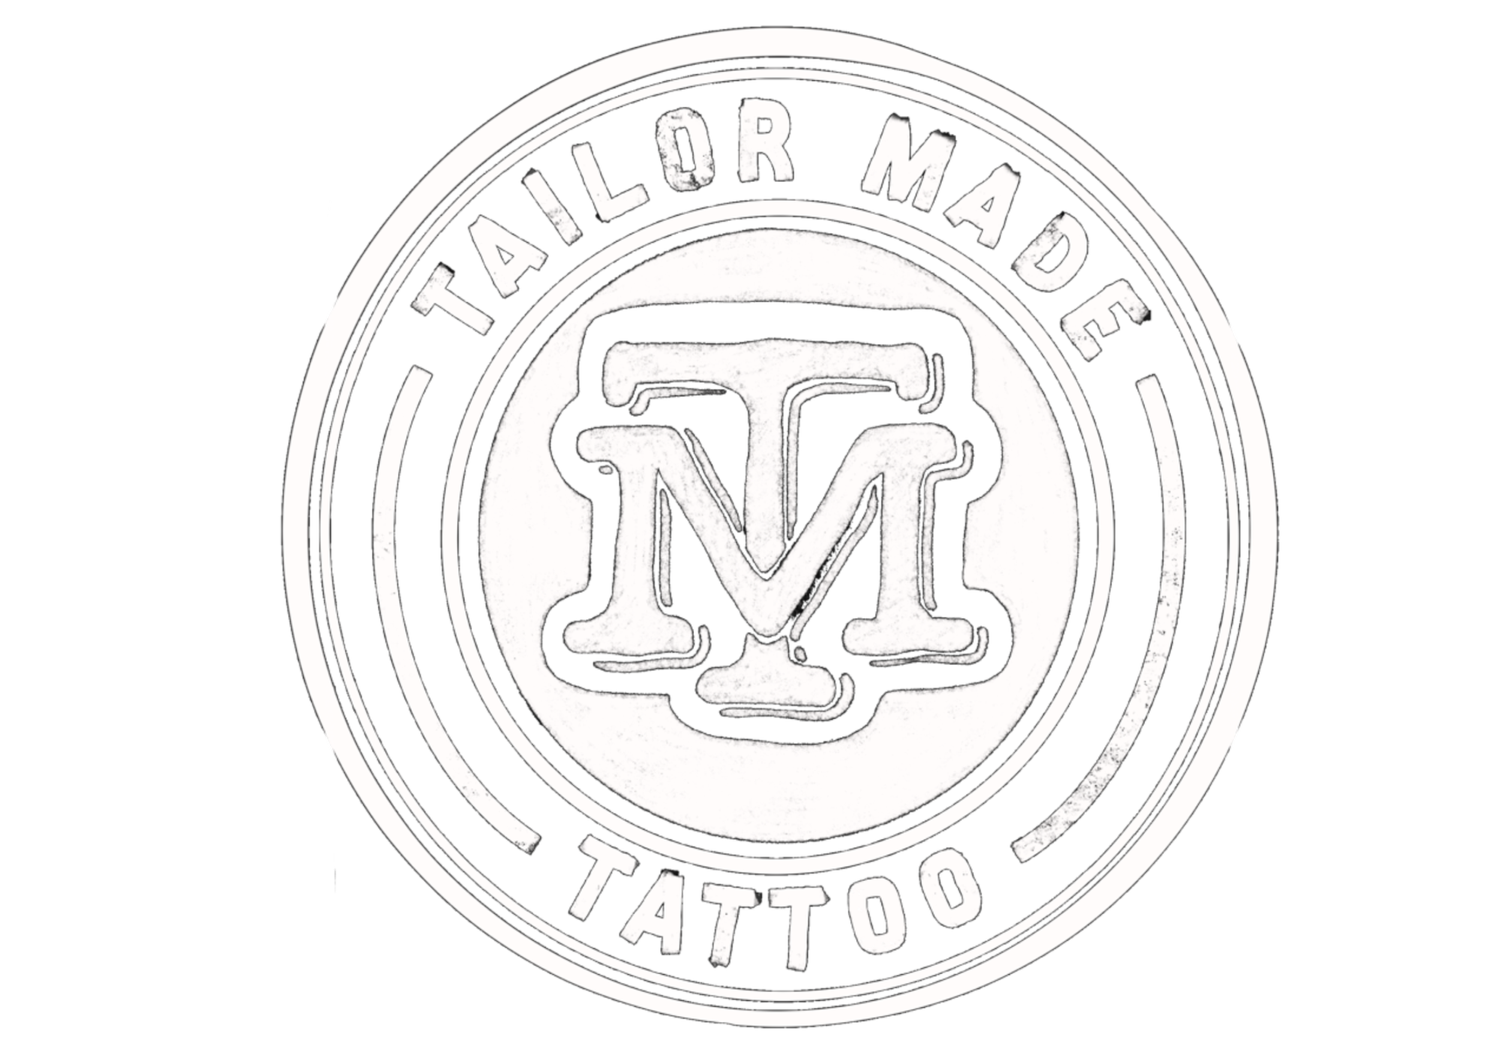  Tailor Made Tattoo